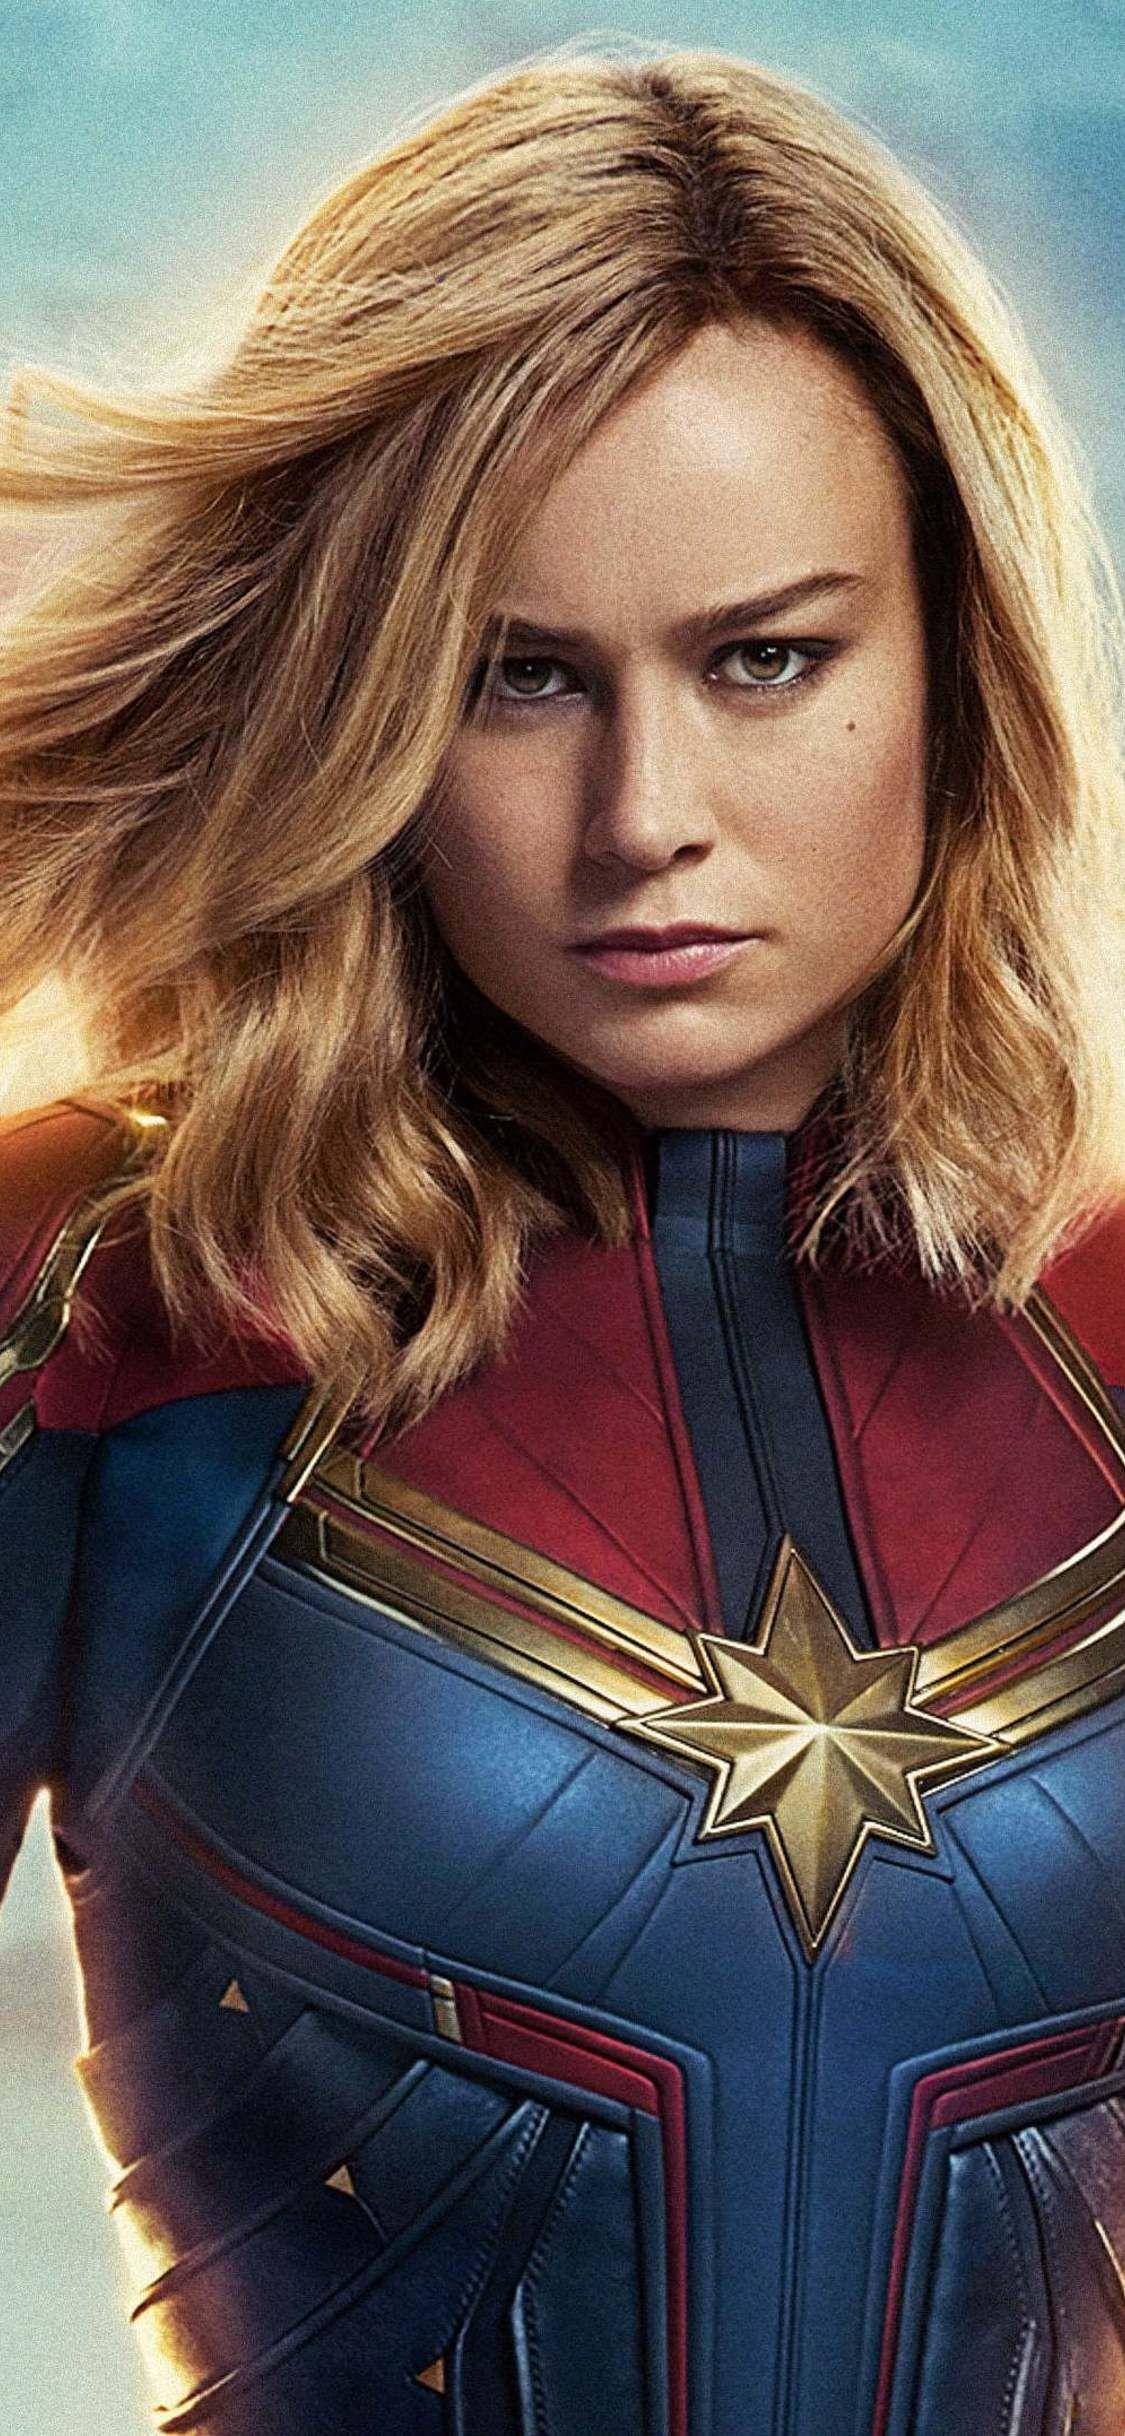 Captain Marvel Movie 4k 2019 iPhone XS, iPhone iPhone X